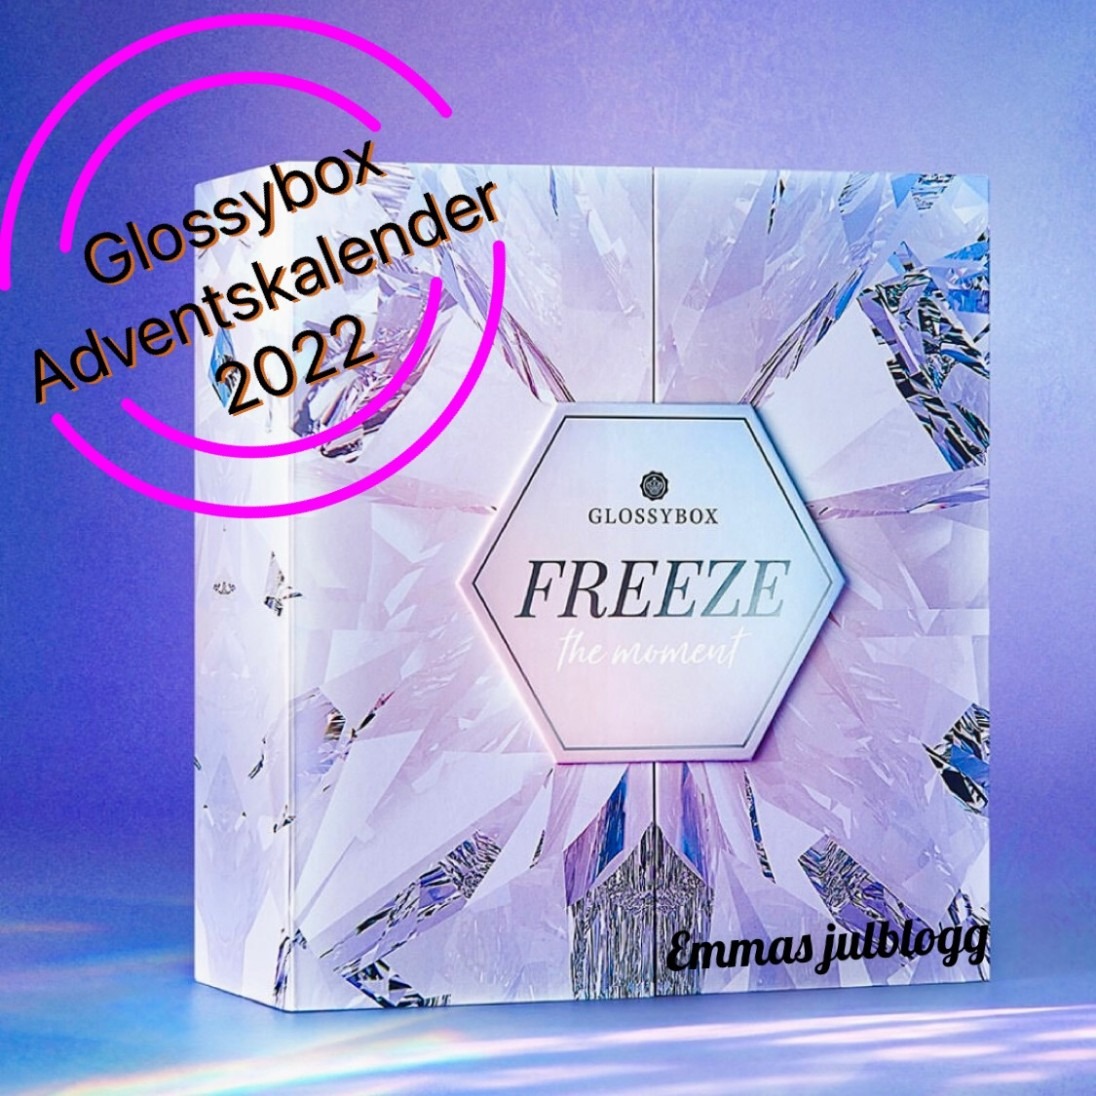 Glossybox adventskalender 2022